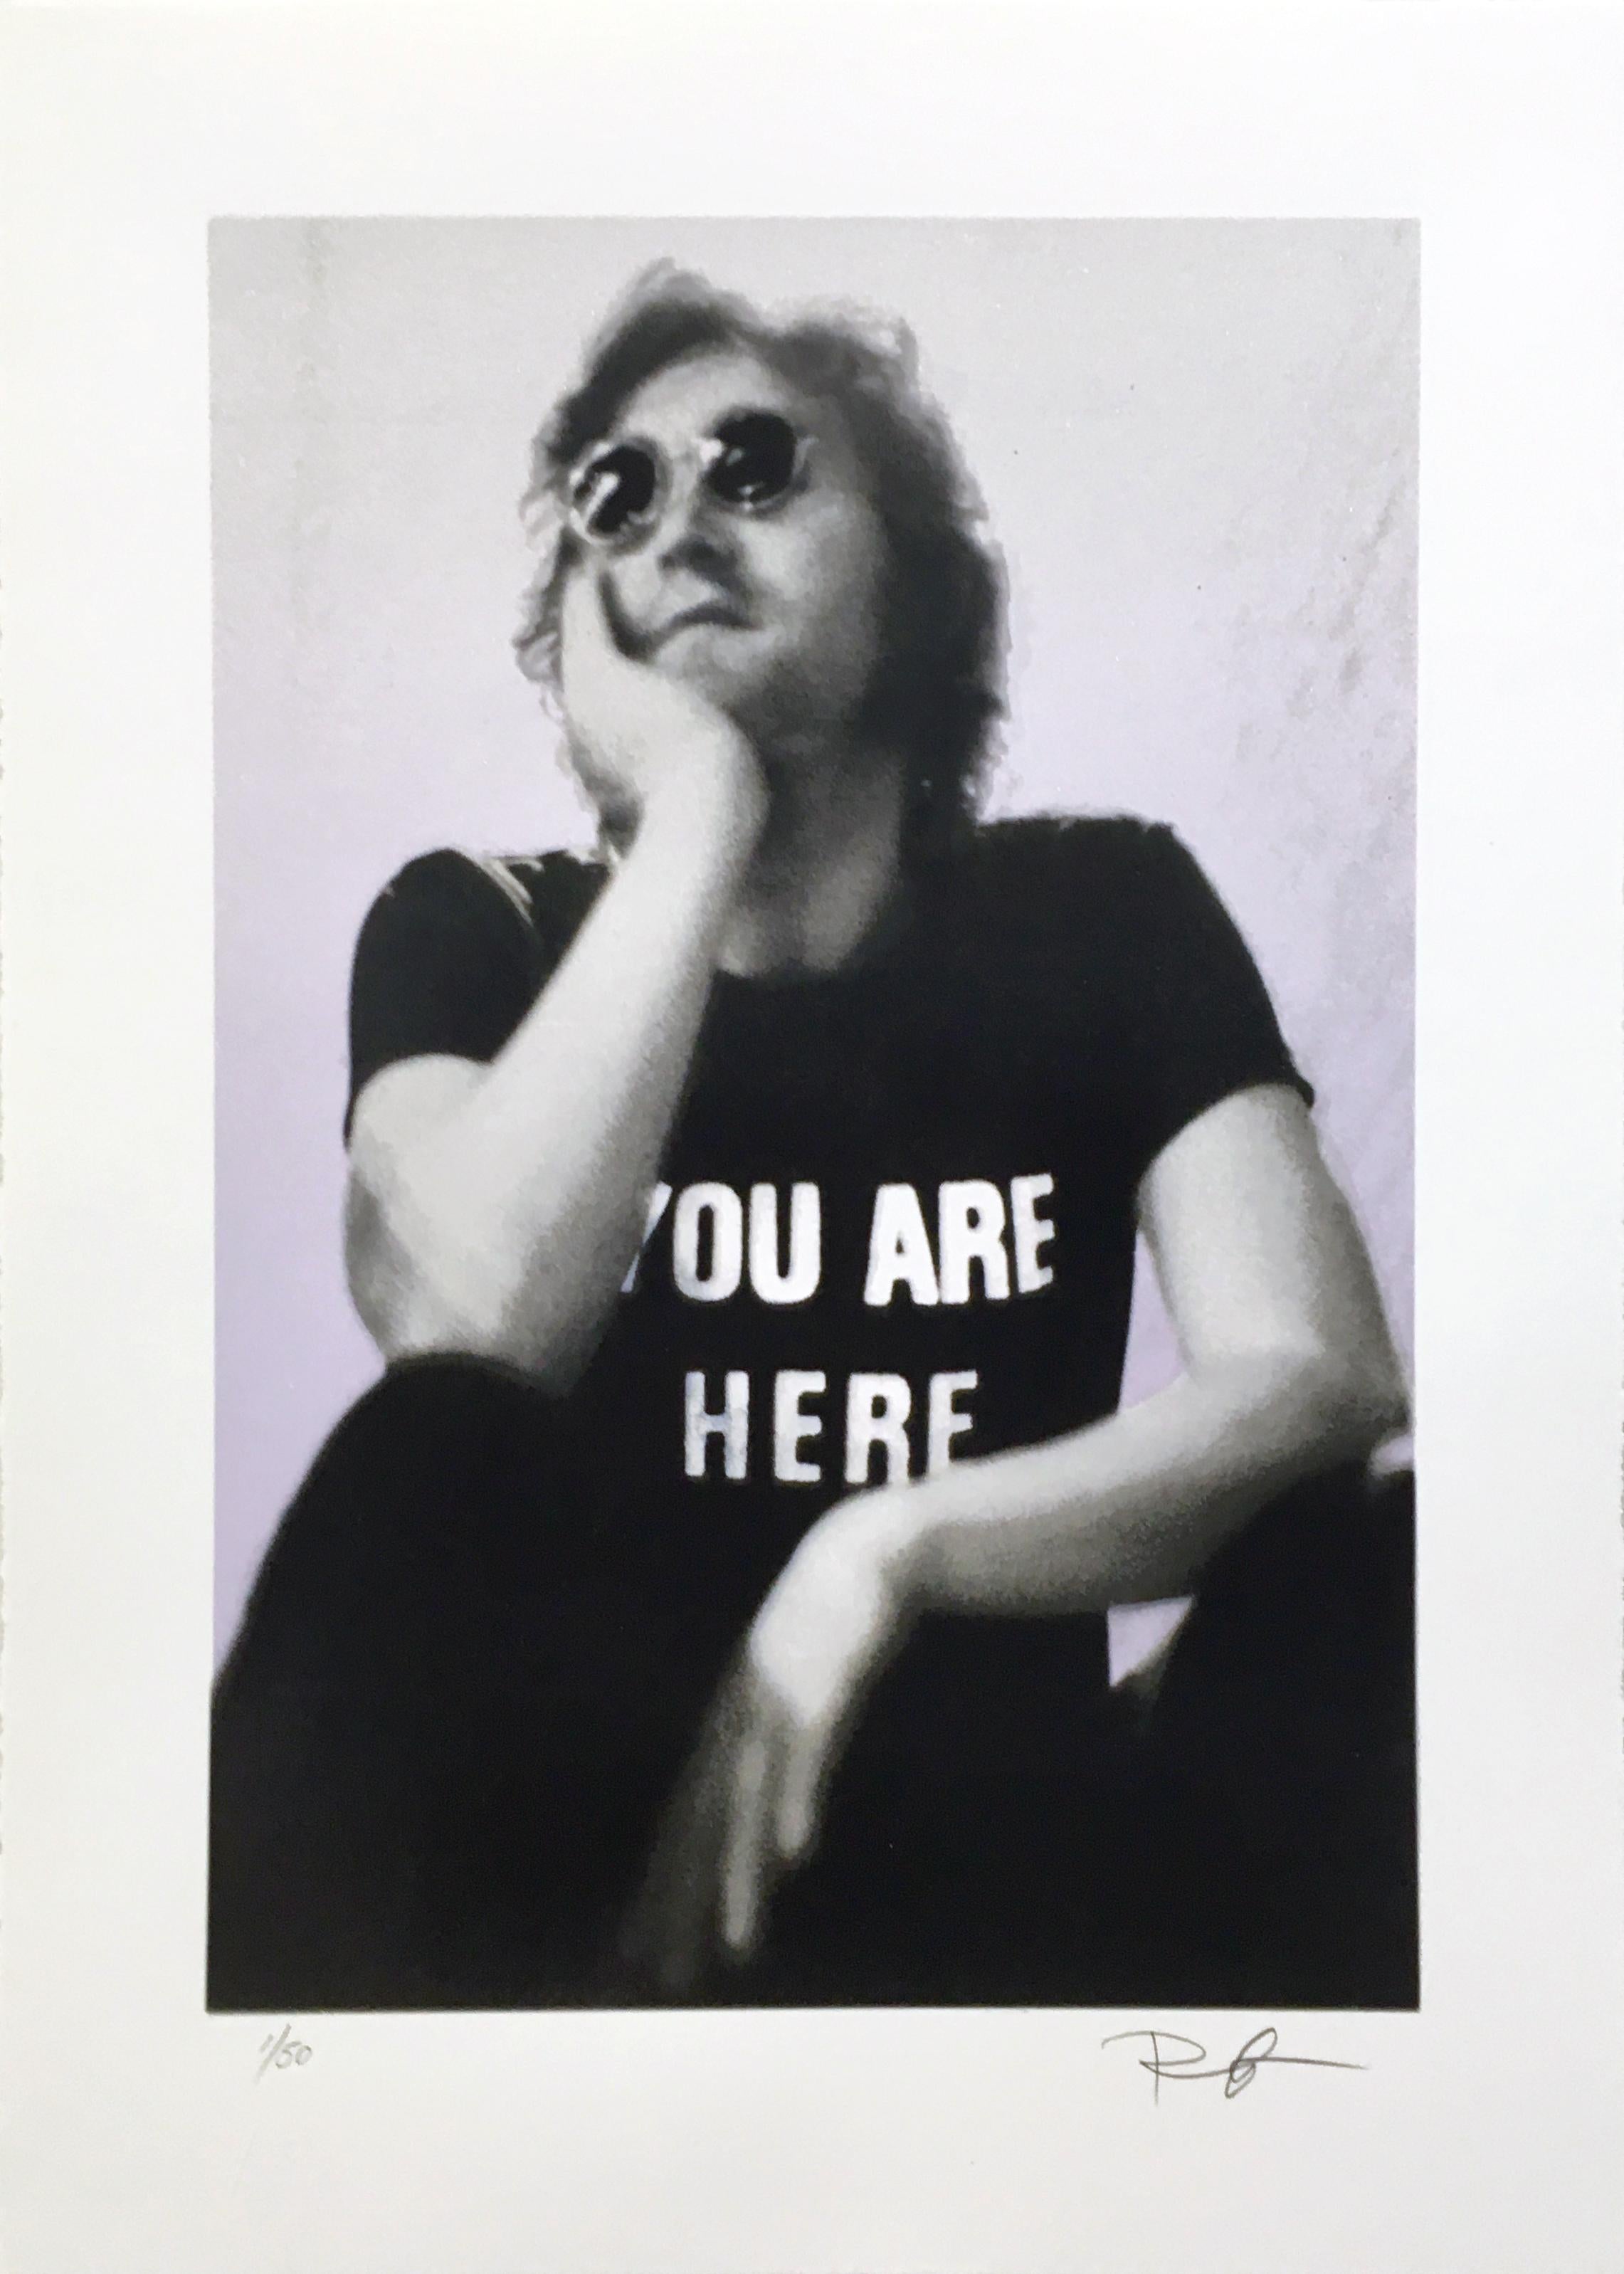 Bob Gruen Portrait Print - "John Lennon, Fillmore East, NYC, August 1972"